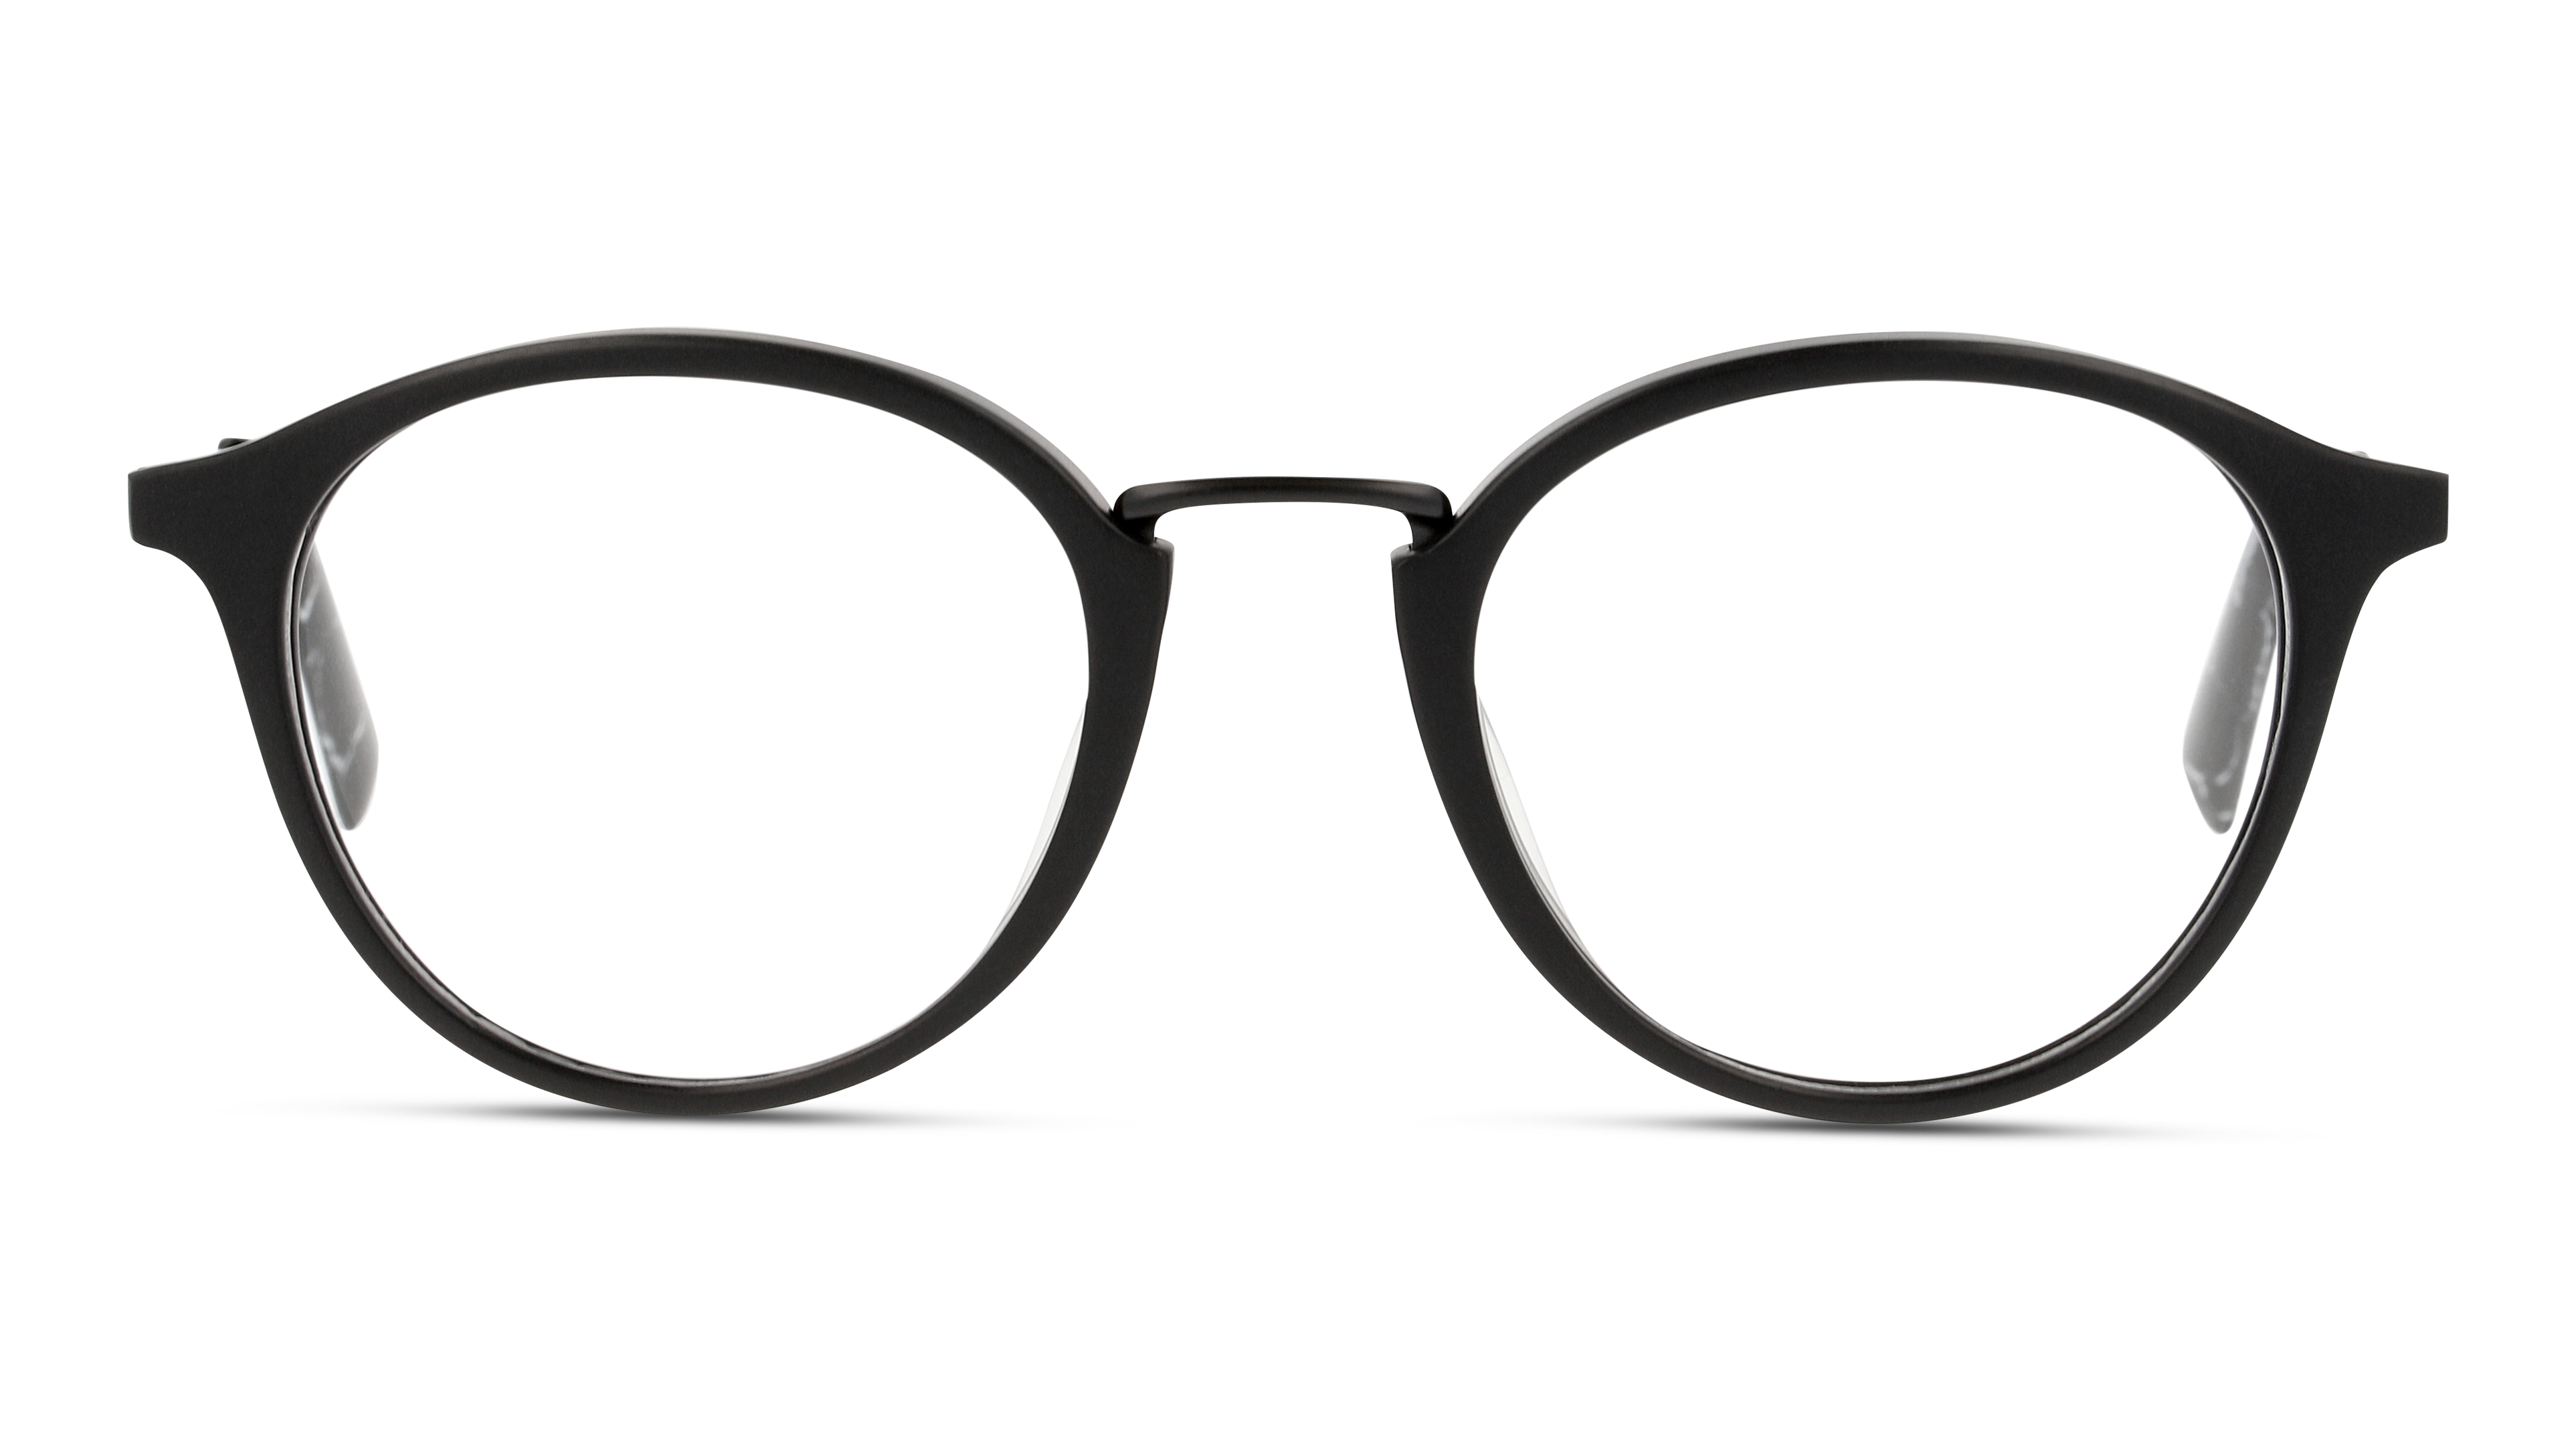 Front Unofficial UNOM0203 Glasses Transparent / Black